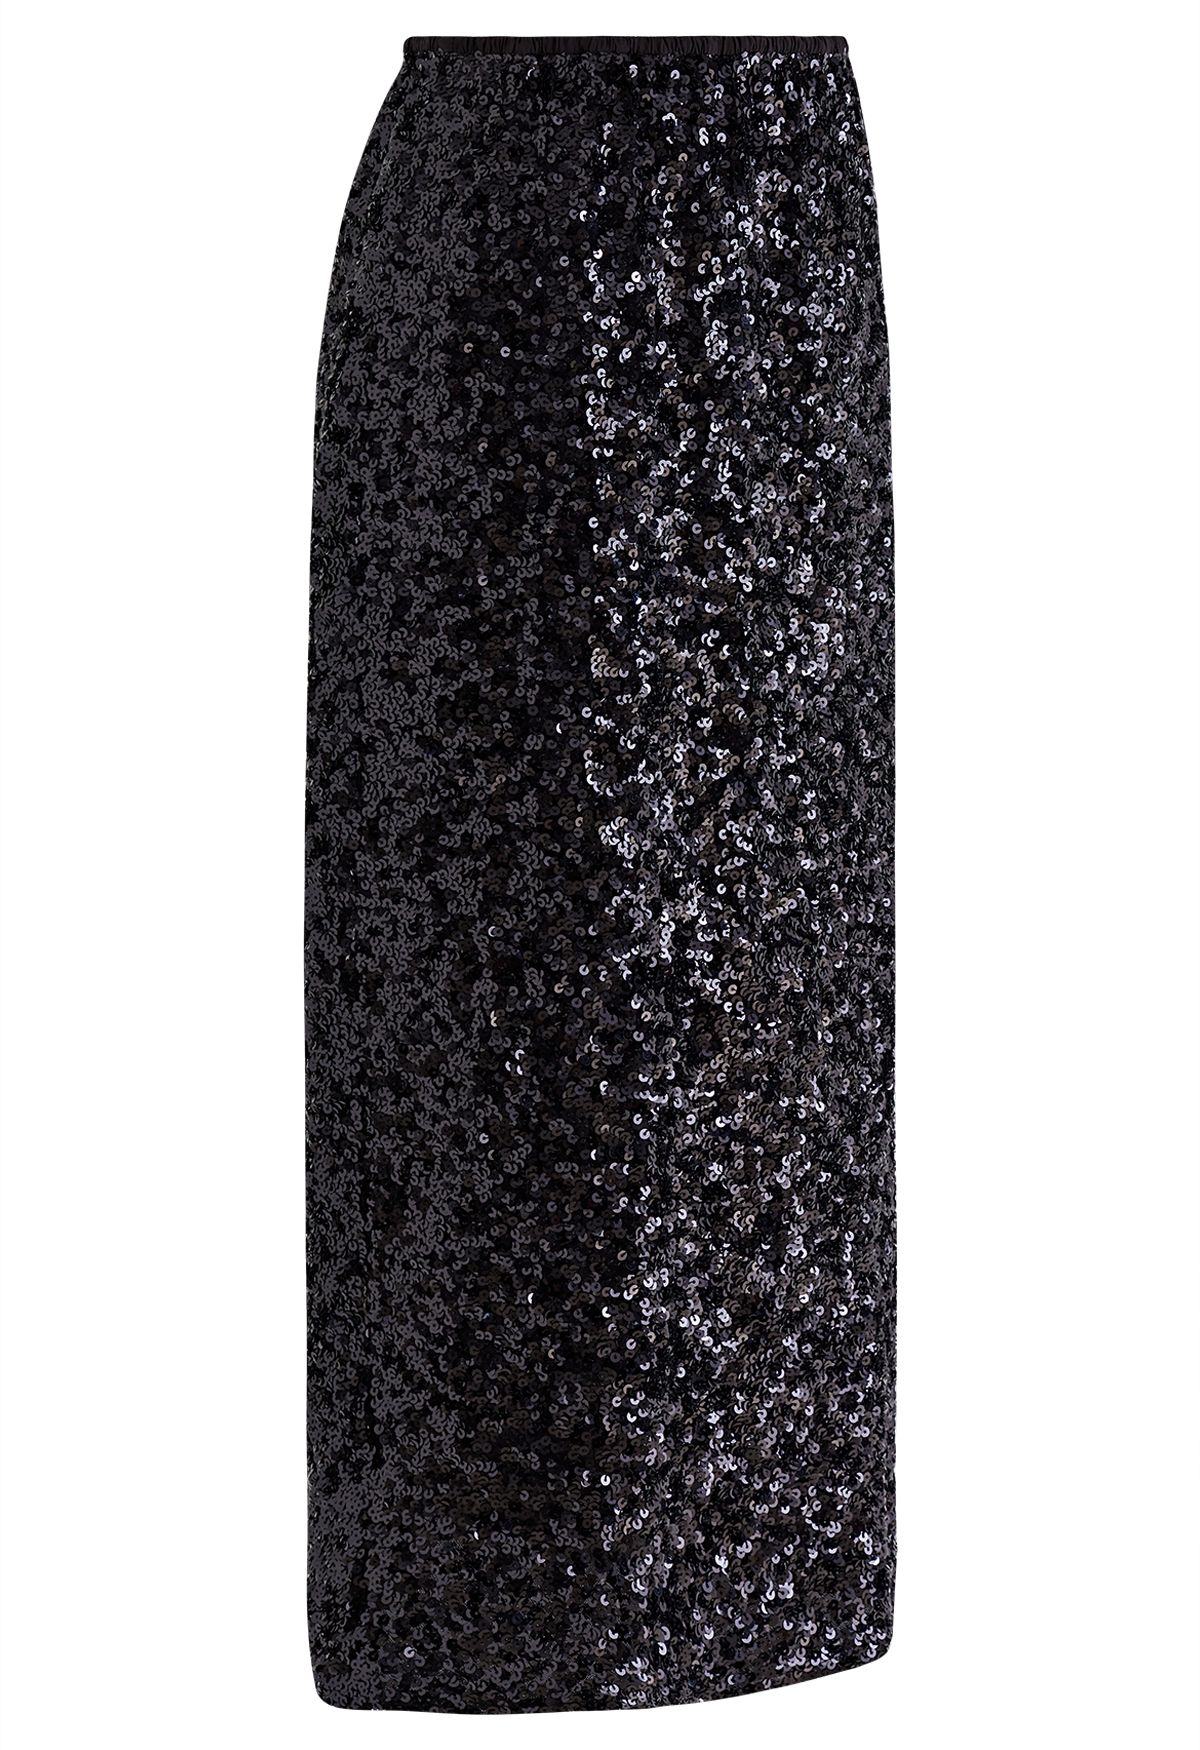 Iridescent Sequin Embellished Pencil Skirt in Black